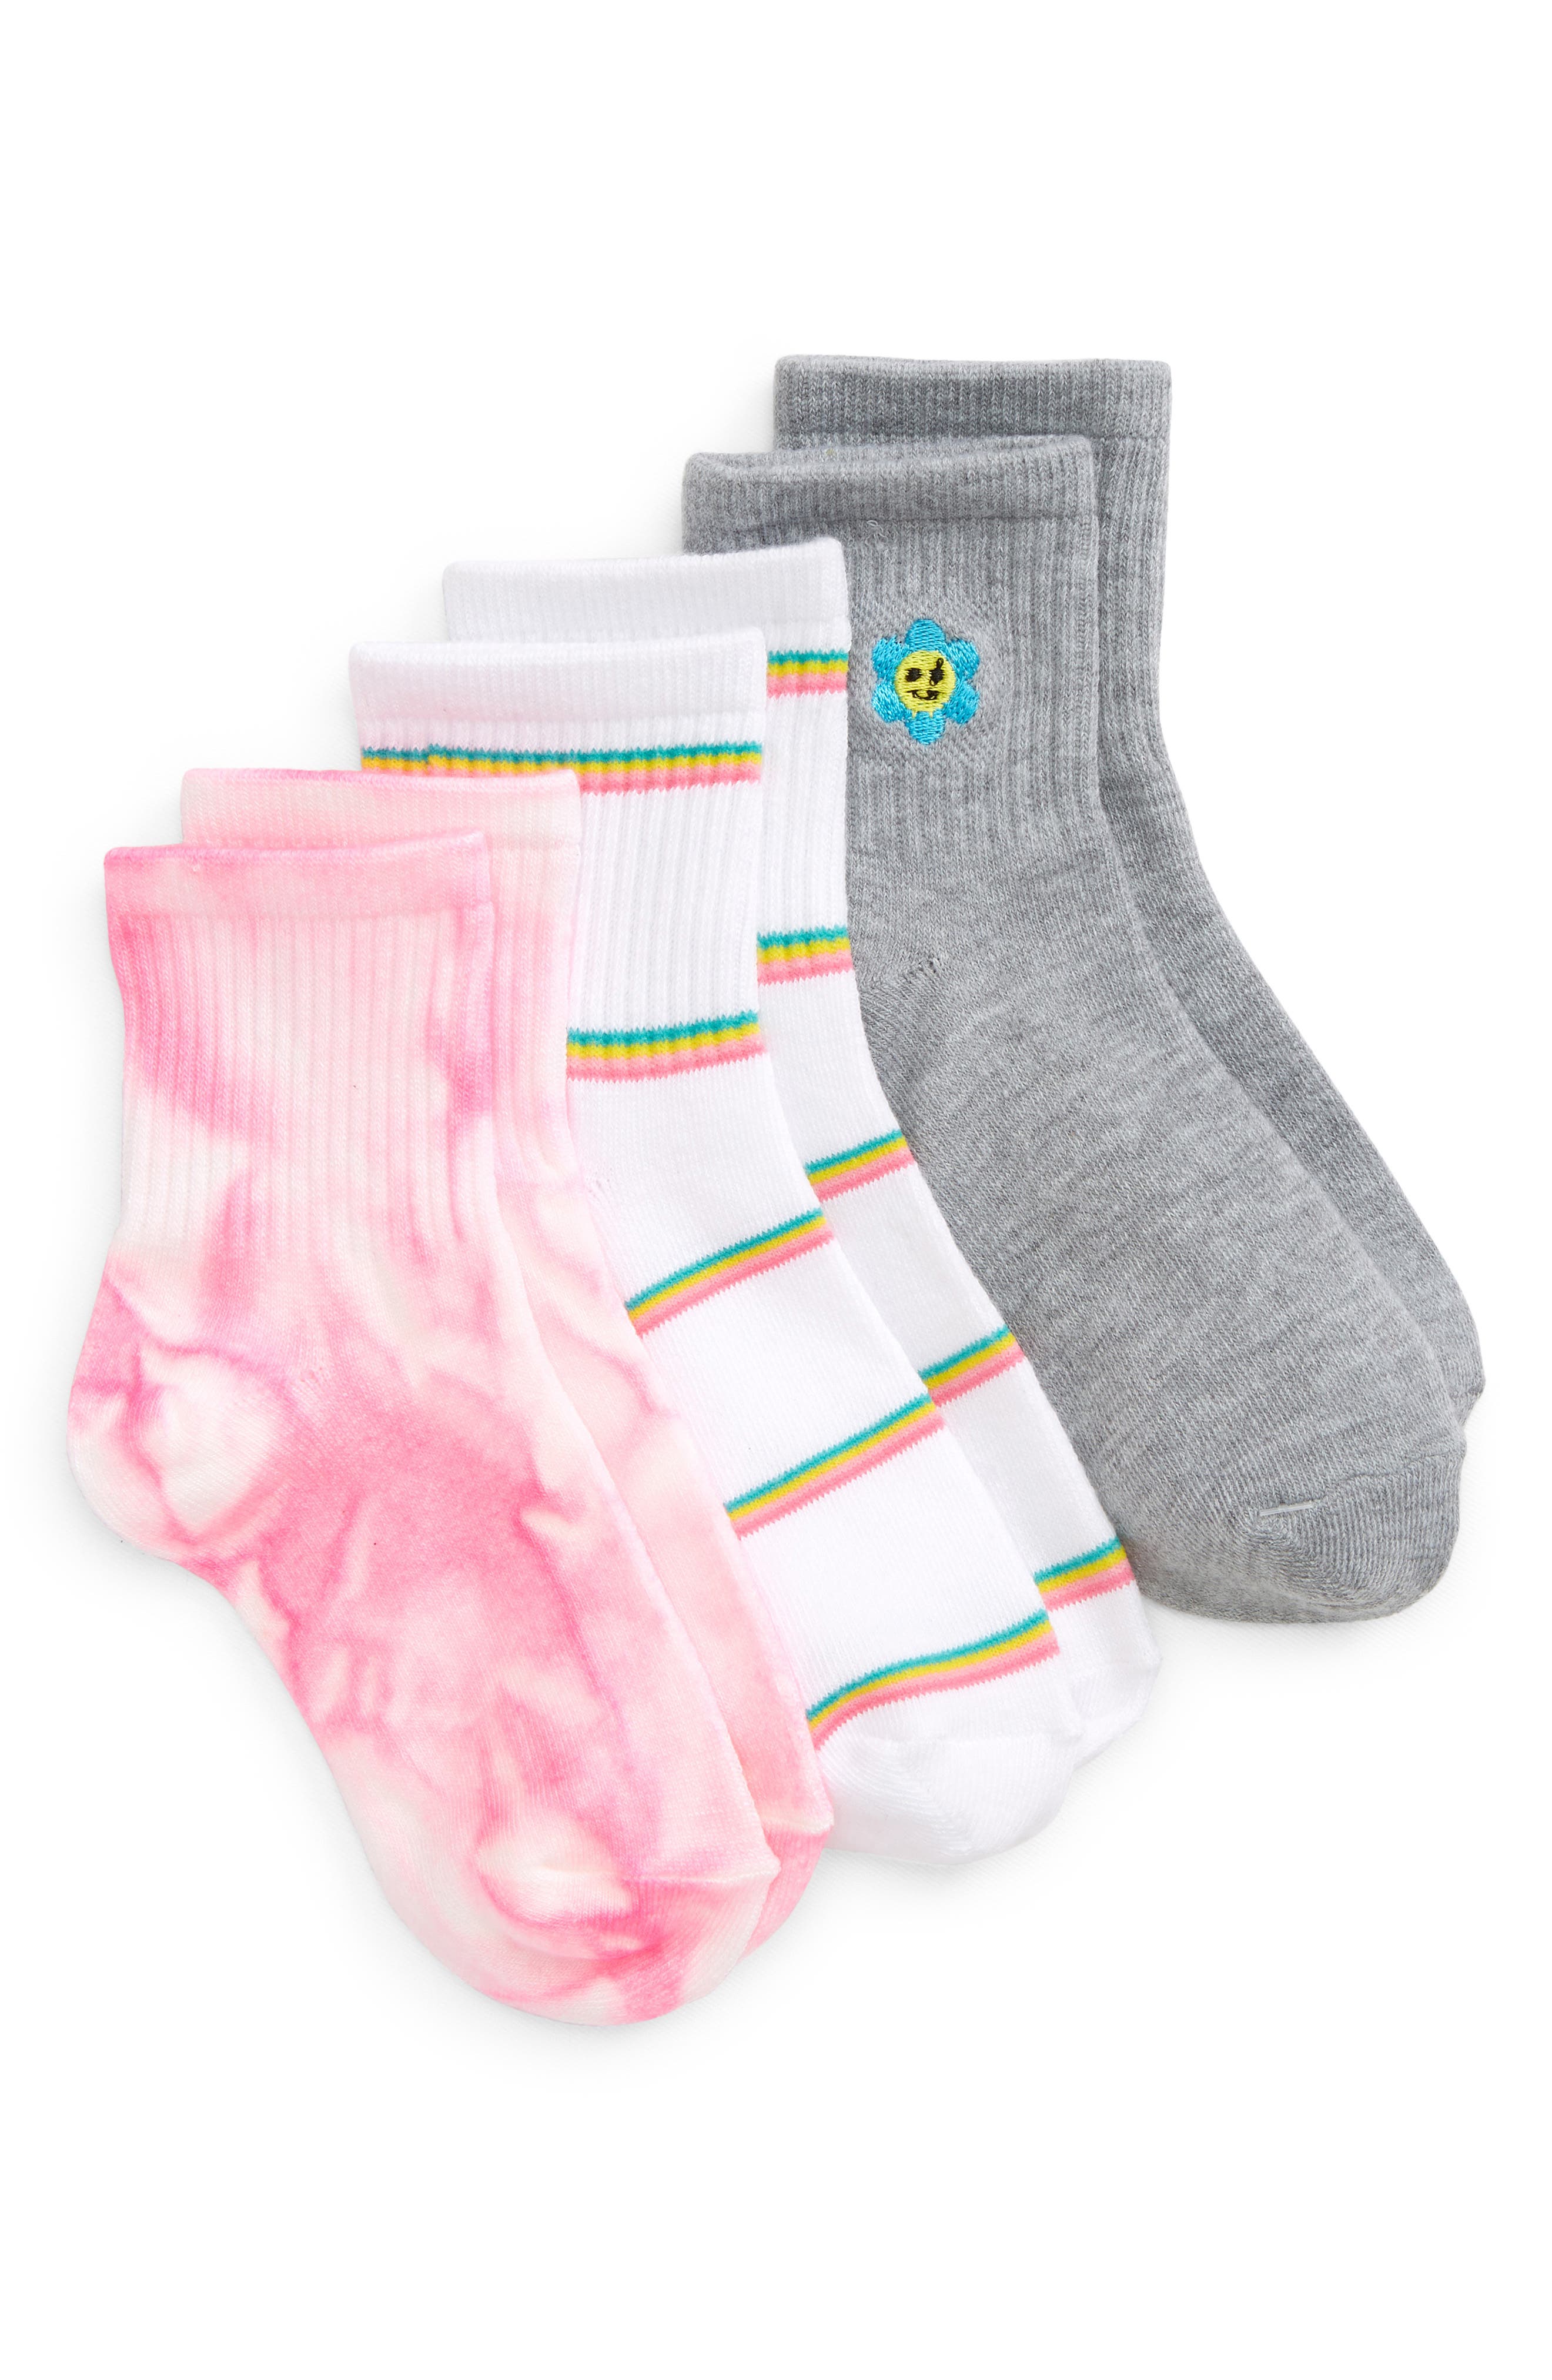 Nordstrom Clothing Underwear Socks Kids Assorted 2-Pack Quarter Socks in Happy Daisy Pack at Nordstrom 